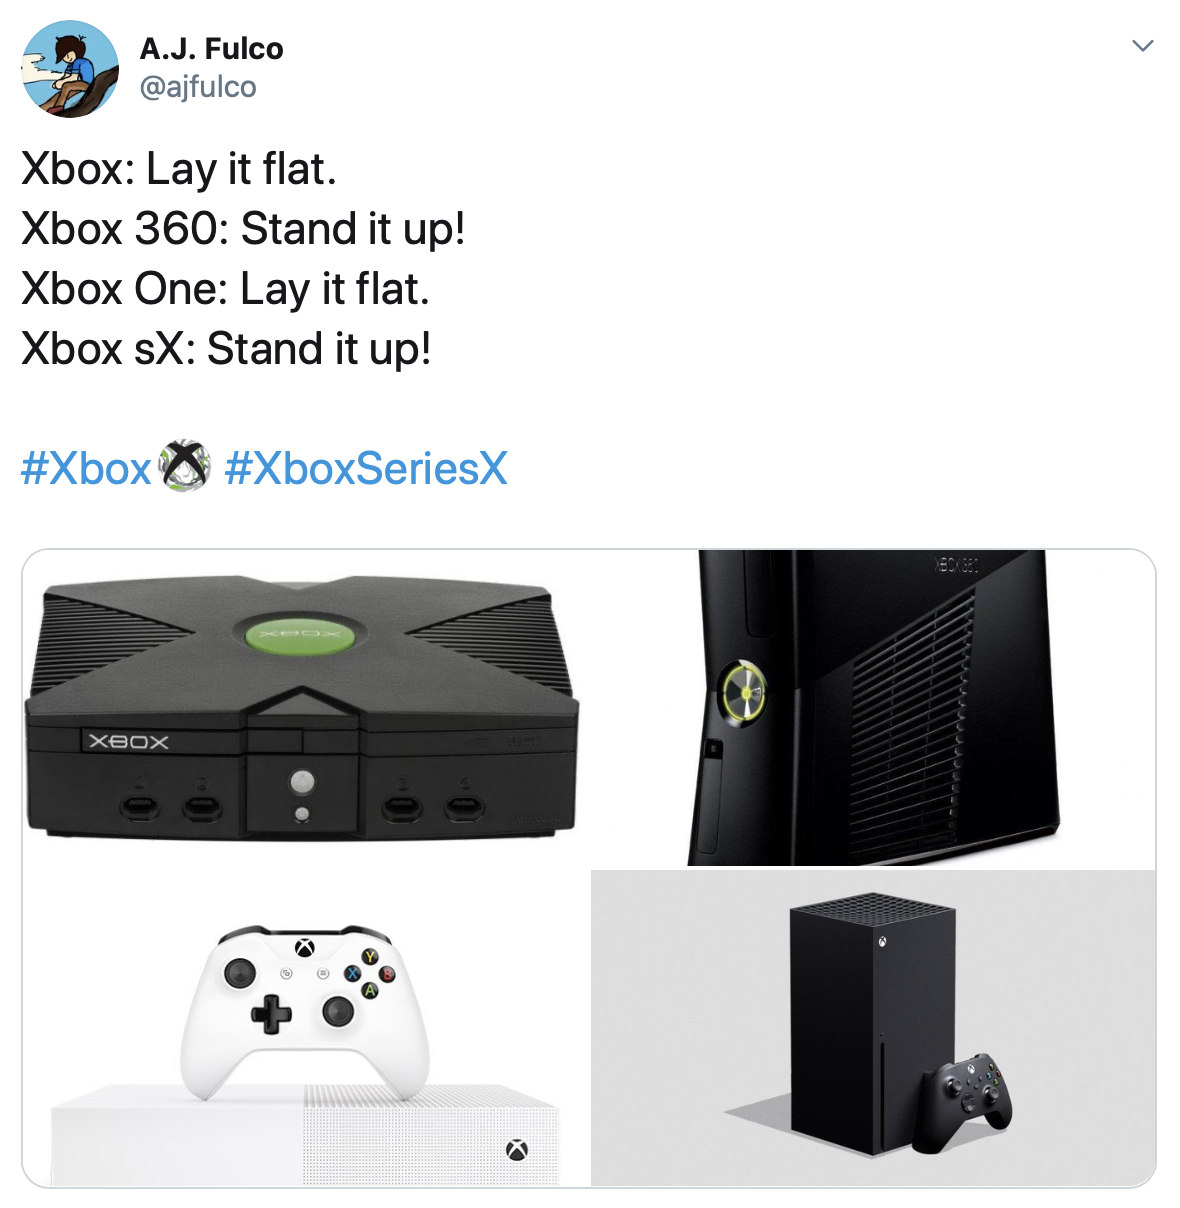 xbox series x gaming memes - xbox series x memes - A.J. Fulco Xbox Lay it flat. Xbox 360 Stand it up! Xbox One Lay it flat. Xbox Sx Stand it up! Xbox